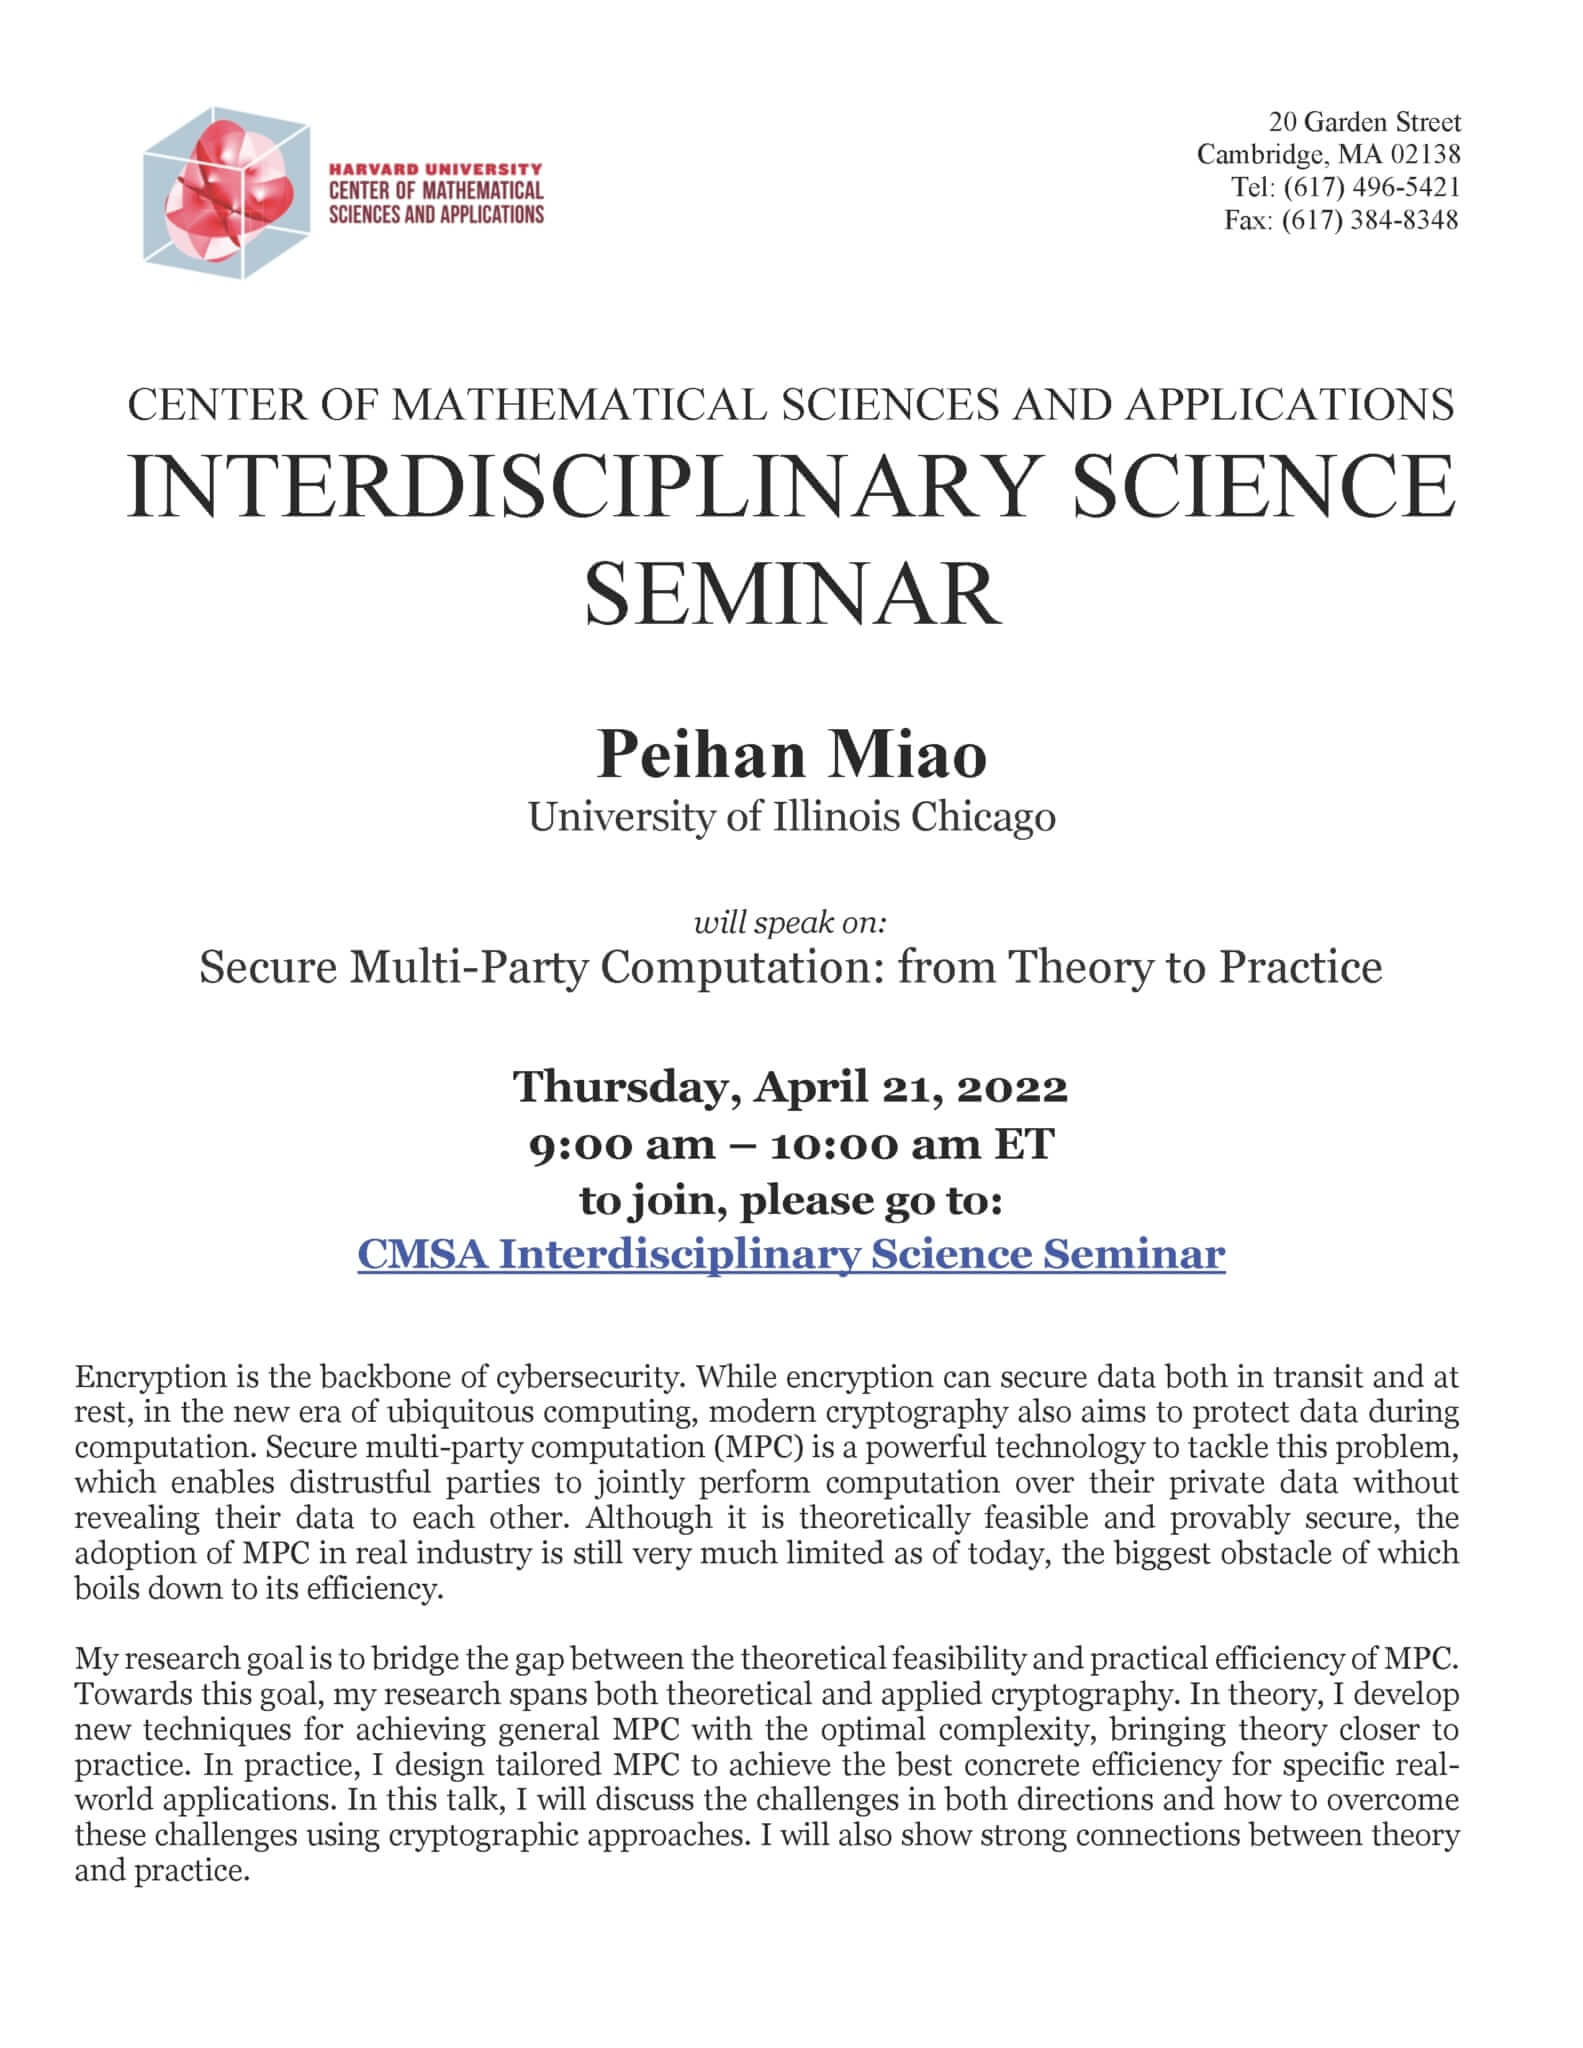 CMSA-Interdisciplinary-Science-Seminar-04.21.22-1583x2048-1